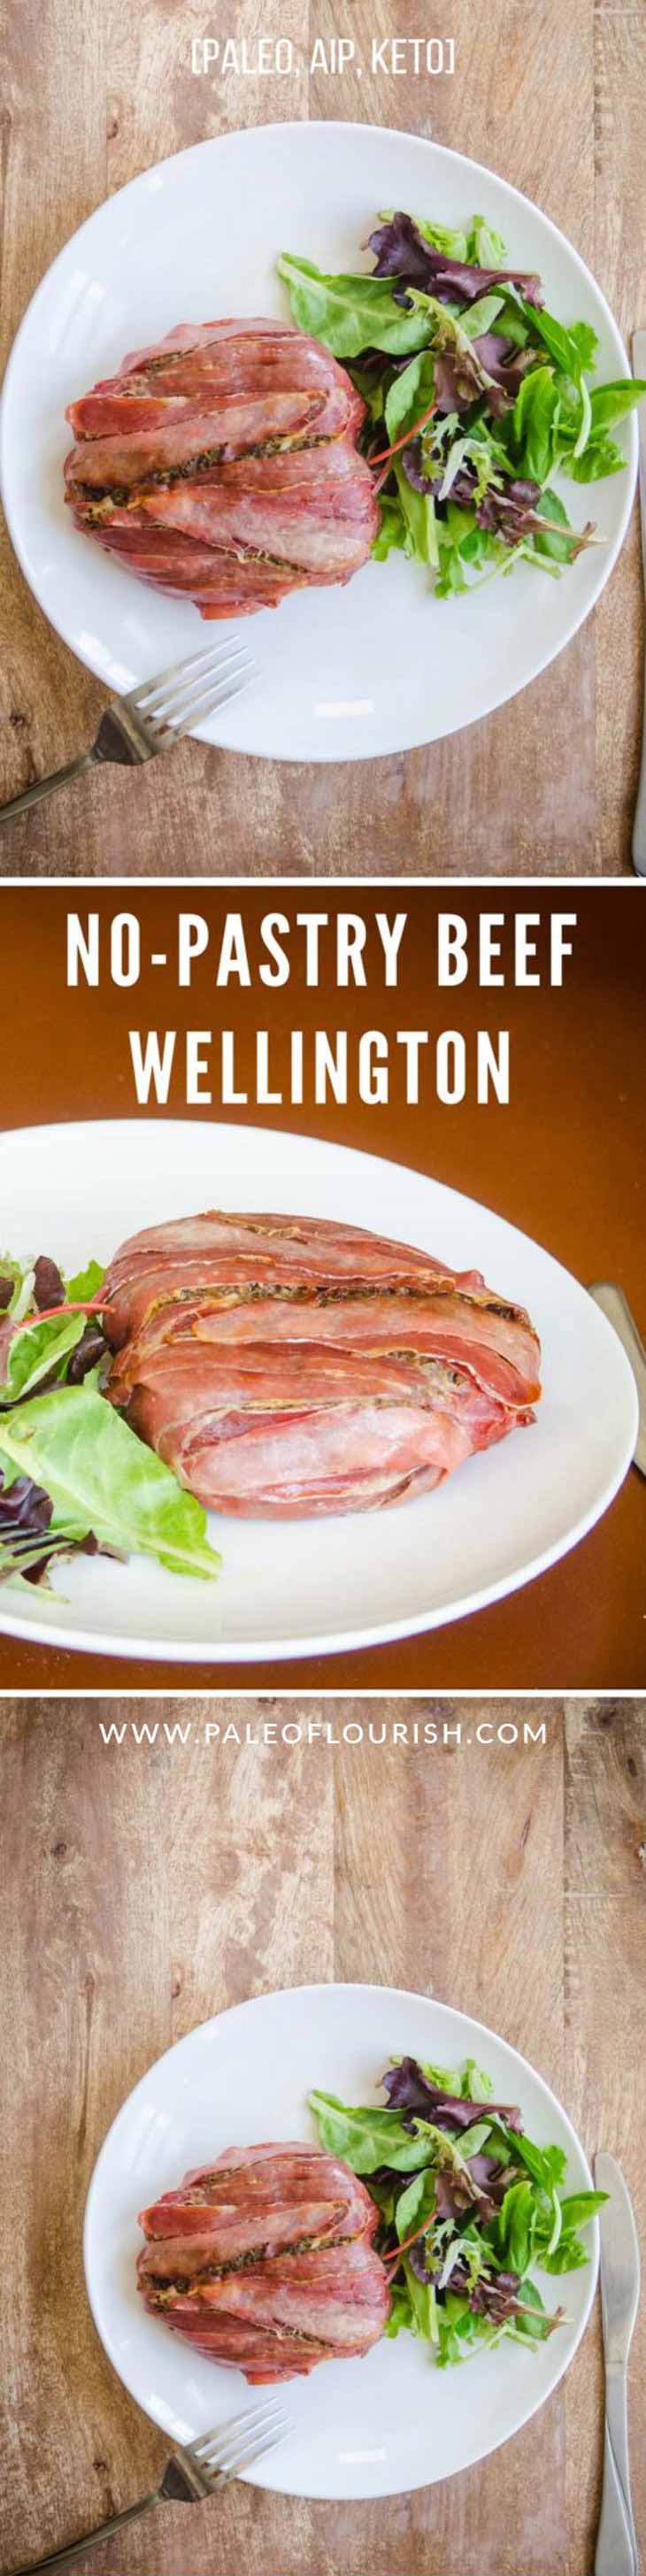 No-Pastry Beef Wellington Recipe [Paleo, AIP, Keto] #paleo #keto #aip #recipes - https://paleoflourish.com/paleo-no-pastry-beef-wellington-recipe